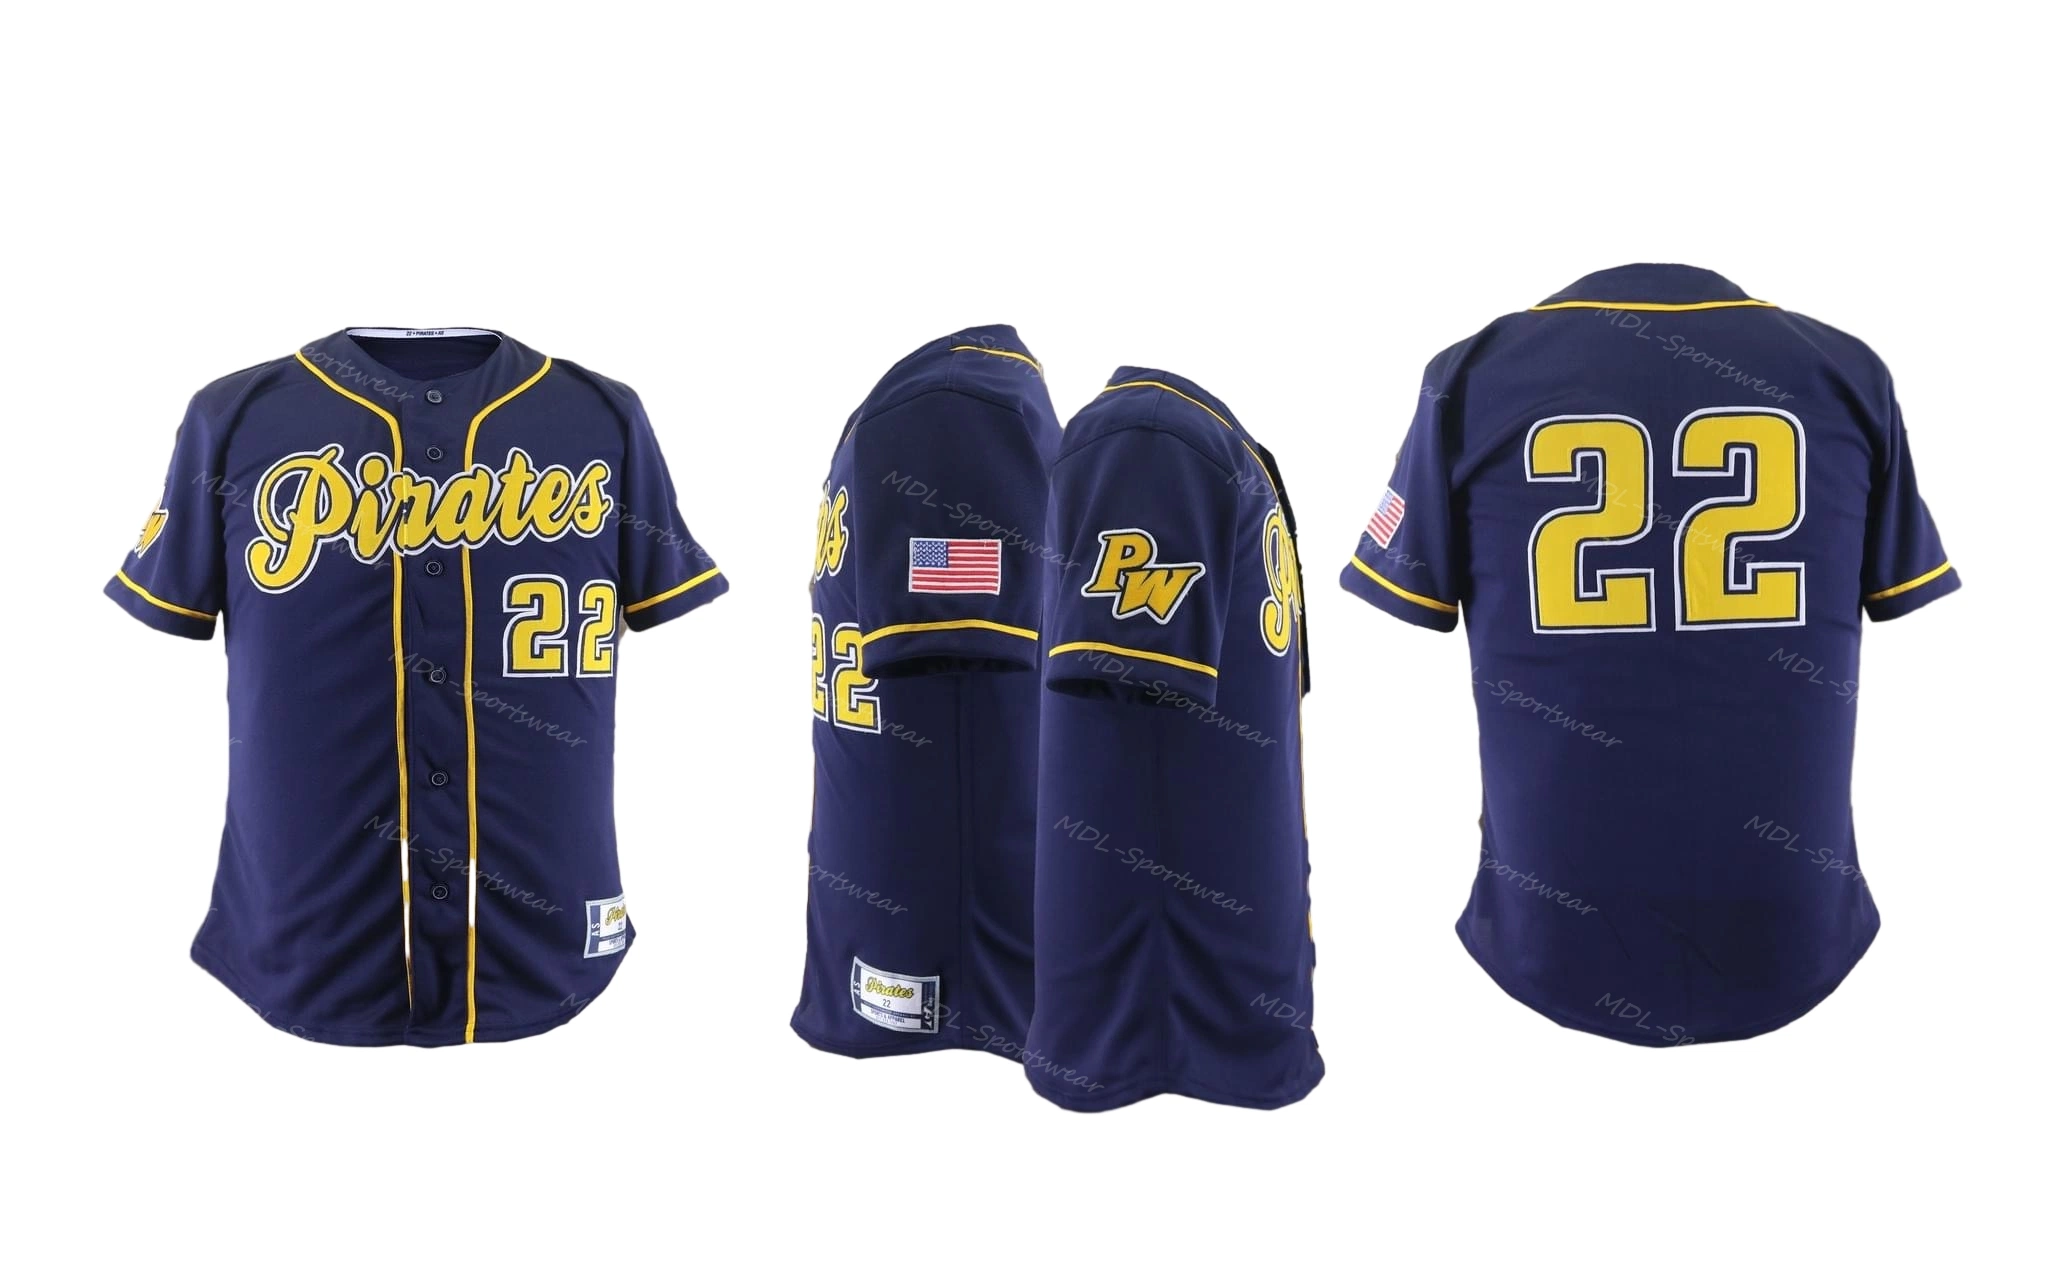 Custom Color Frauen hochwertige genäht Baseball Jersey Sets